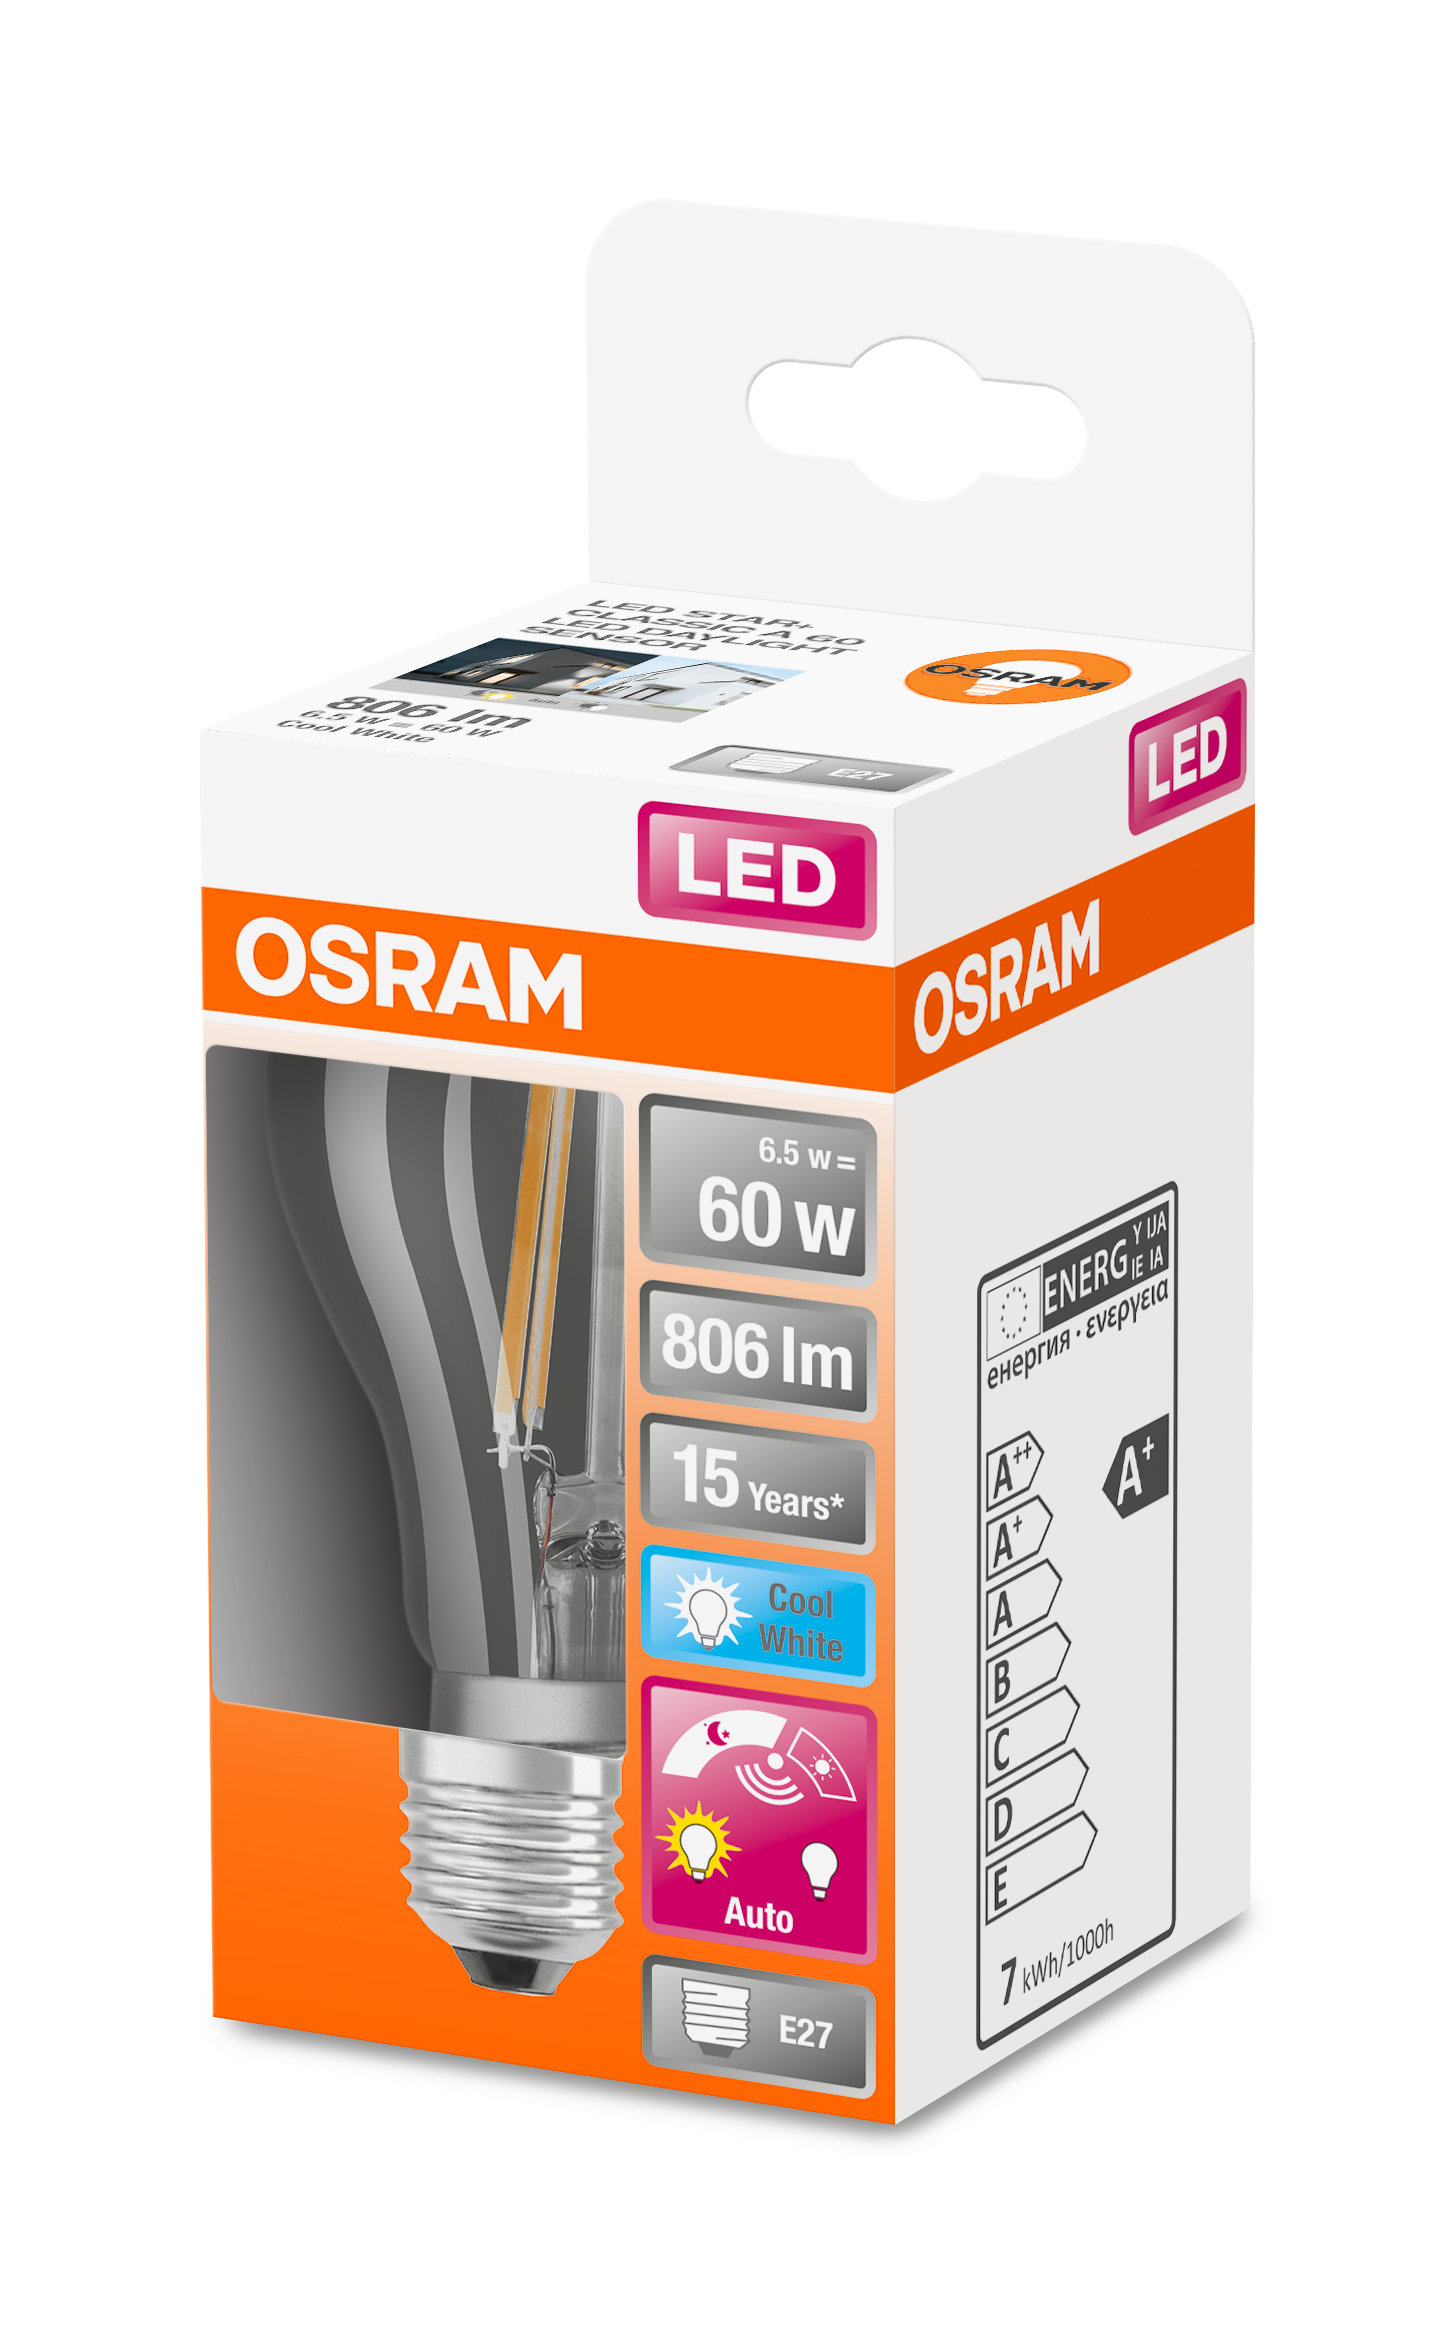 SENSOR DAYLIGHT LED A Kaltweiß Lumen CLASSIC Lampe OSRAM  LED 806